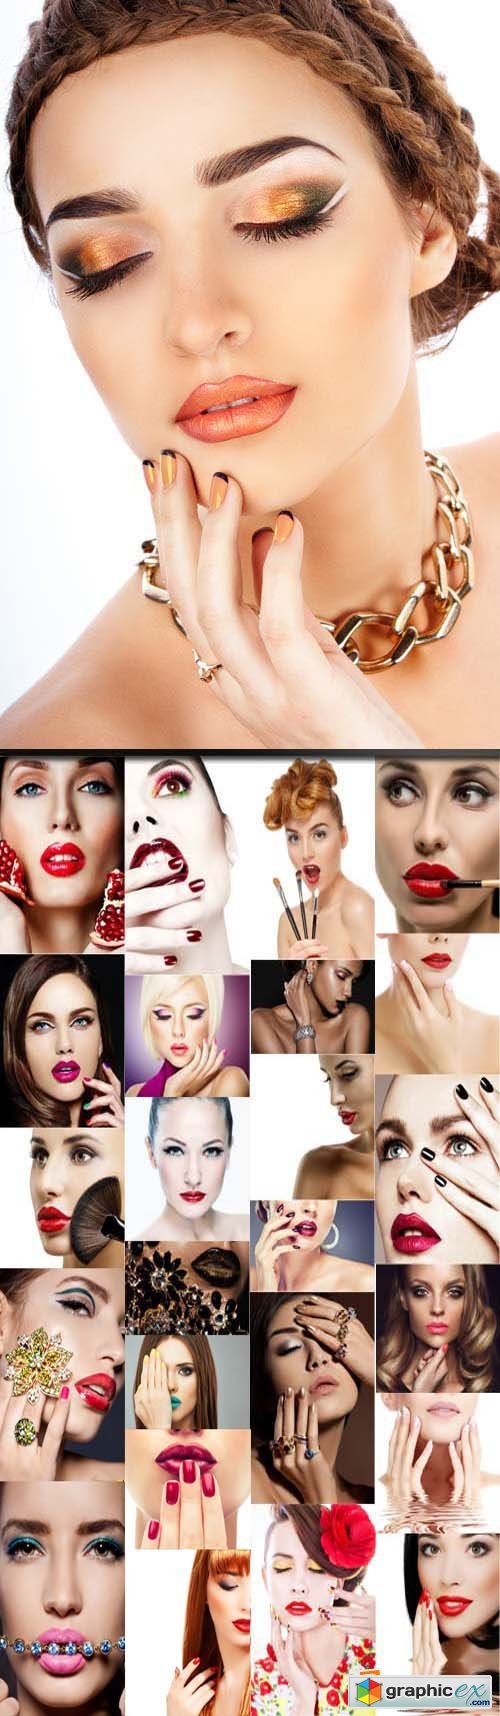 Fashion style, manicure, cosmetics and make-up, 25xJPG